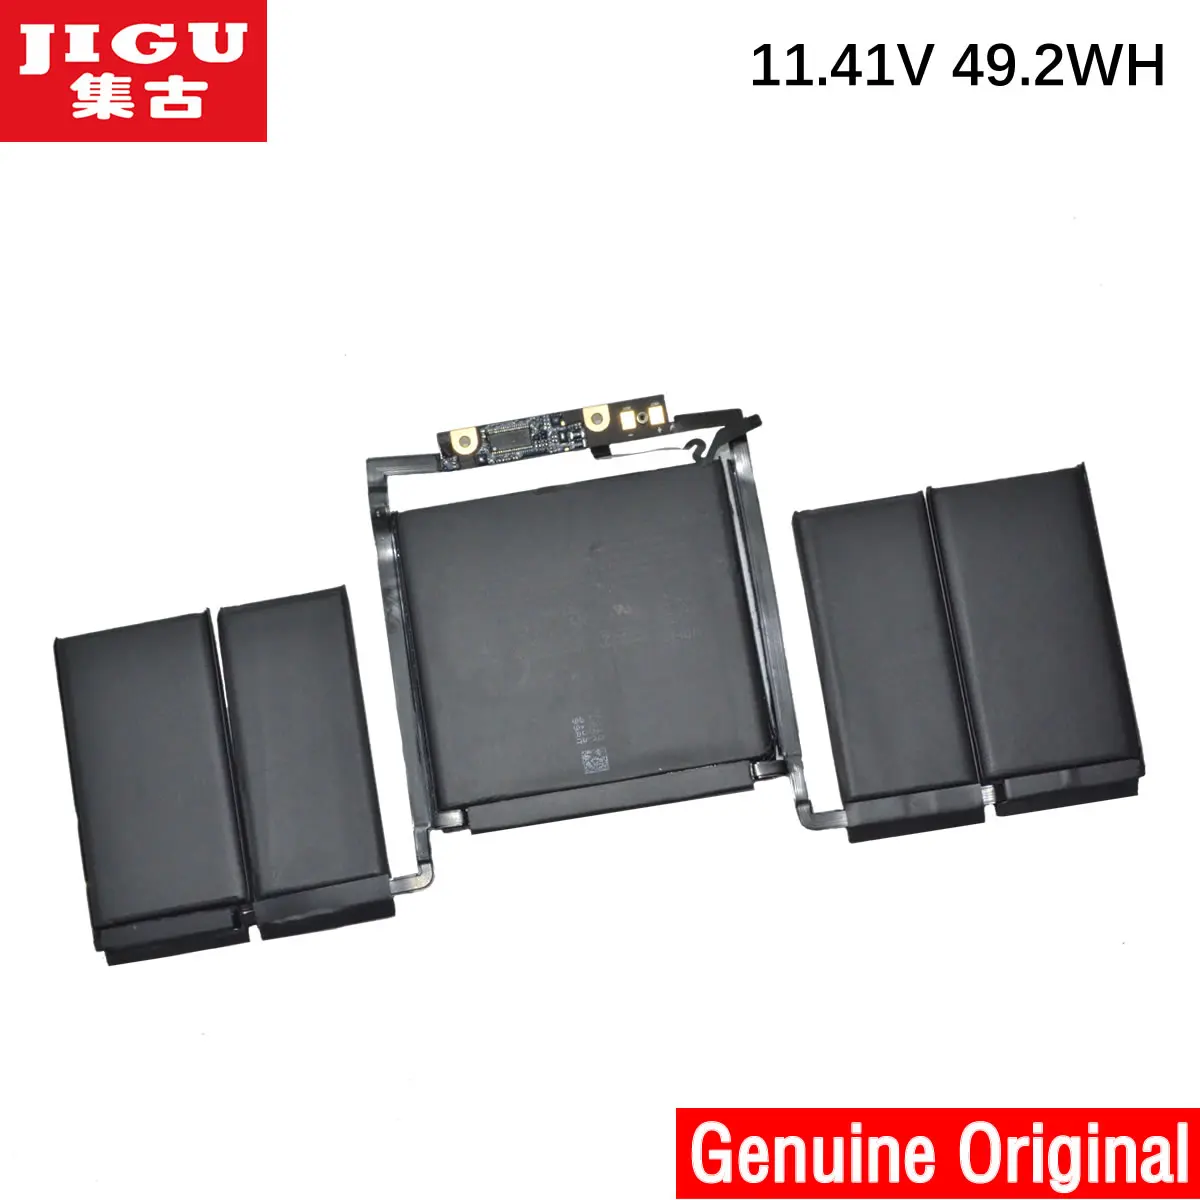 JIGU A1819 Original laptop Baterija Za APPLE A1706 MLH12CH/A MNQG2CH/A Za MacBook Pro 13 Za Macbook Pro 13 2016 11.4 V 49.2 WH